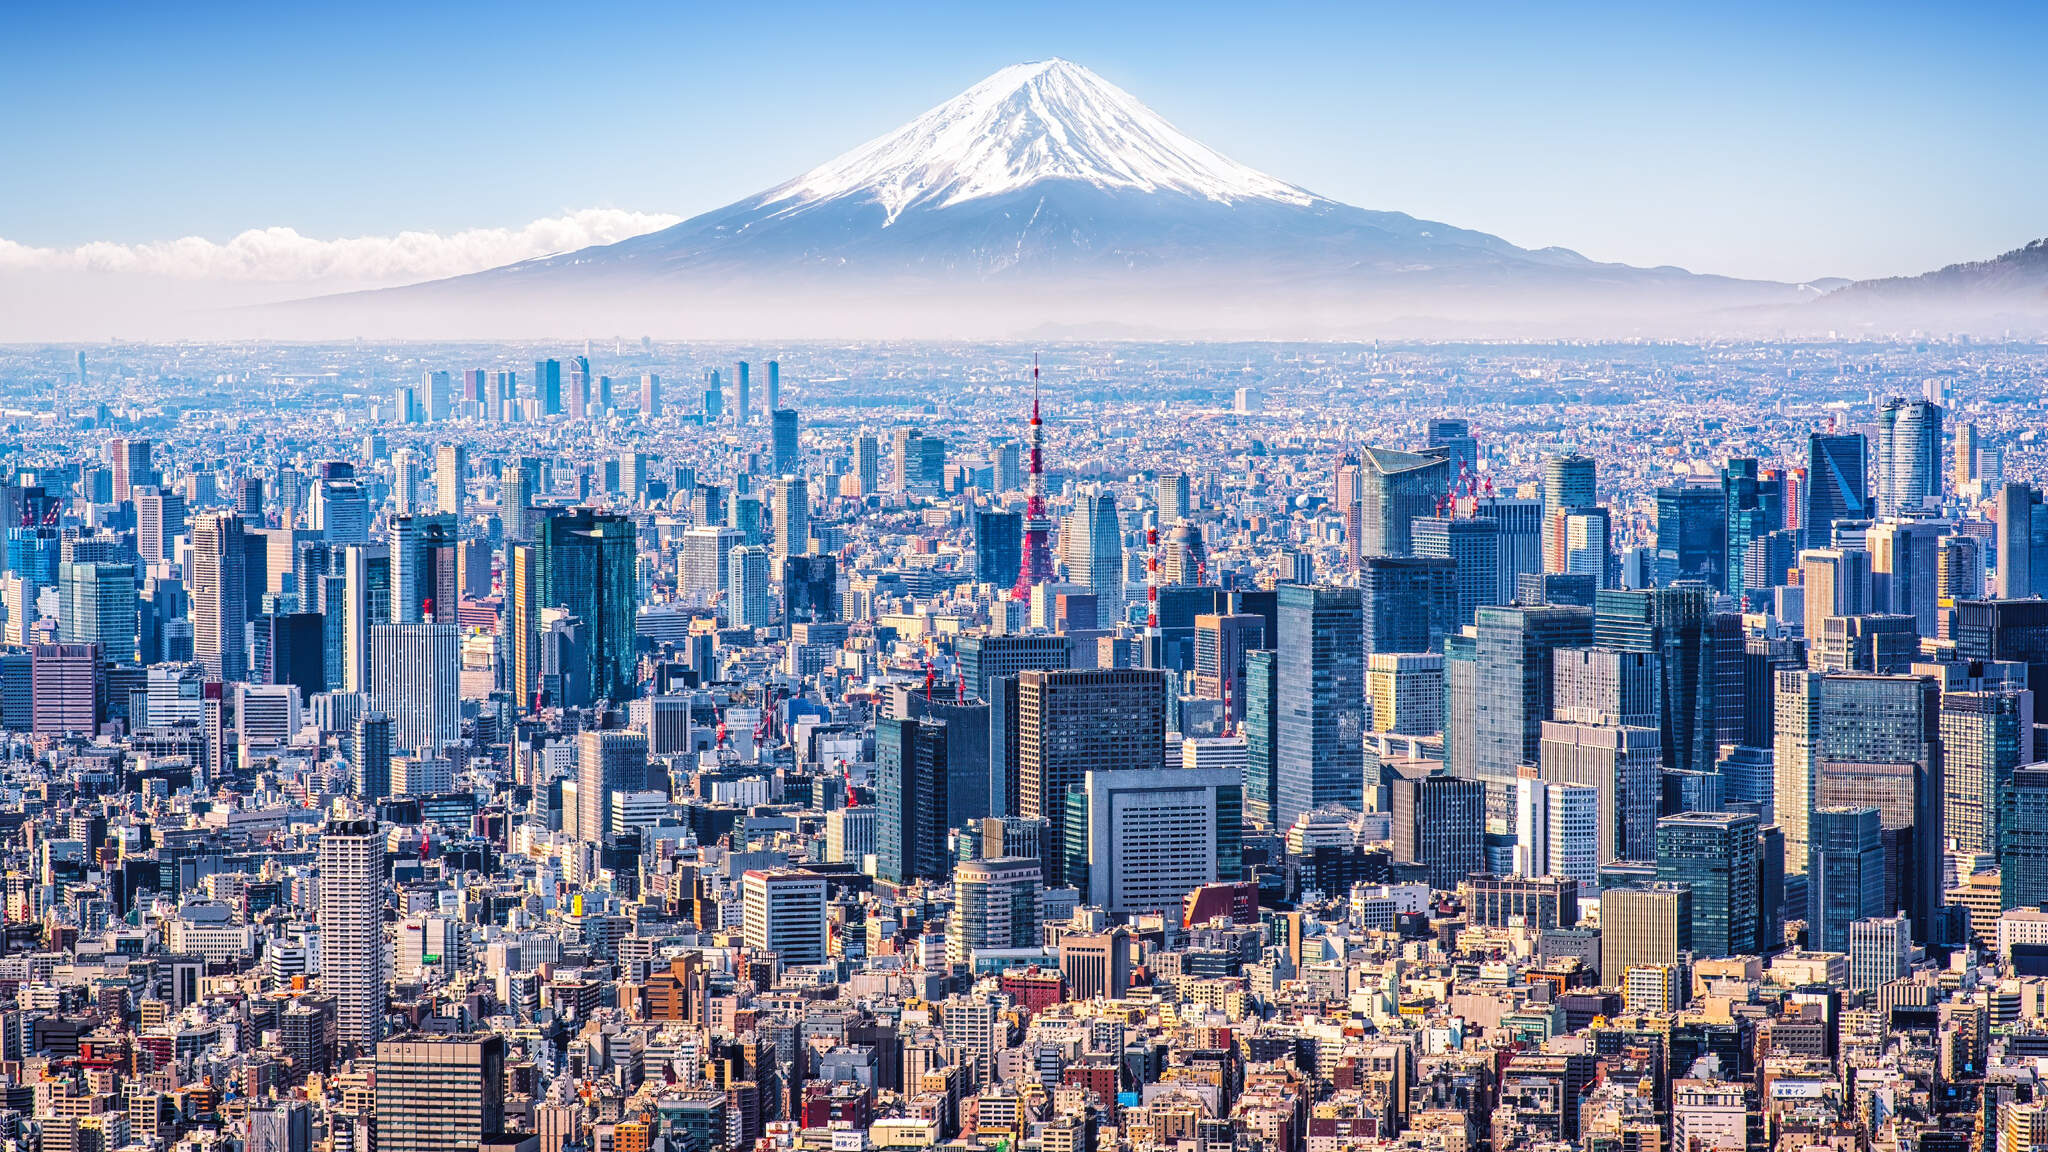 Tokyo, the economic metropolis at the foot of Mount Fuji.